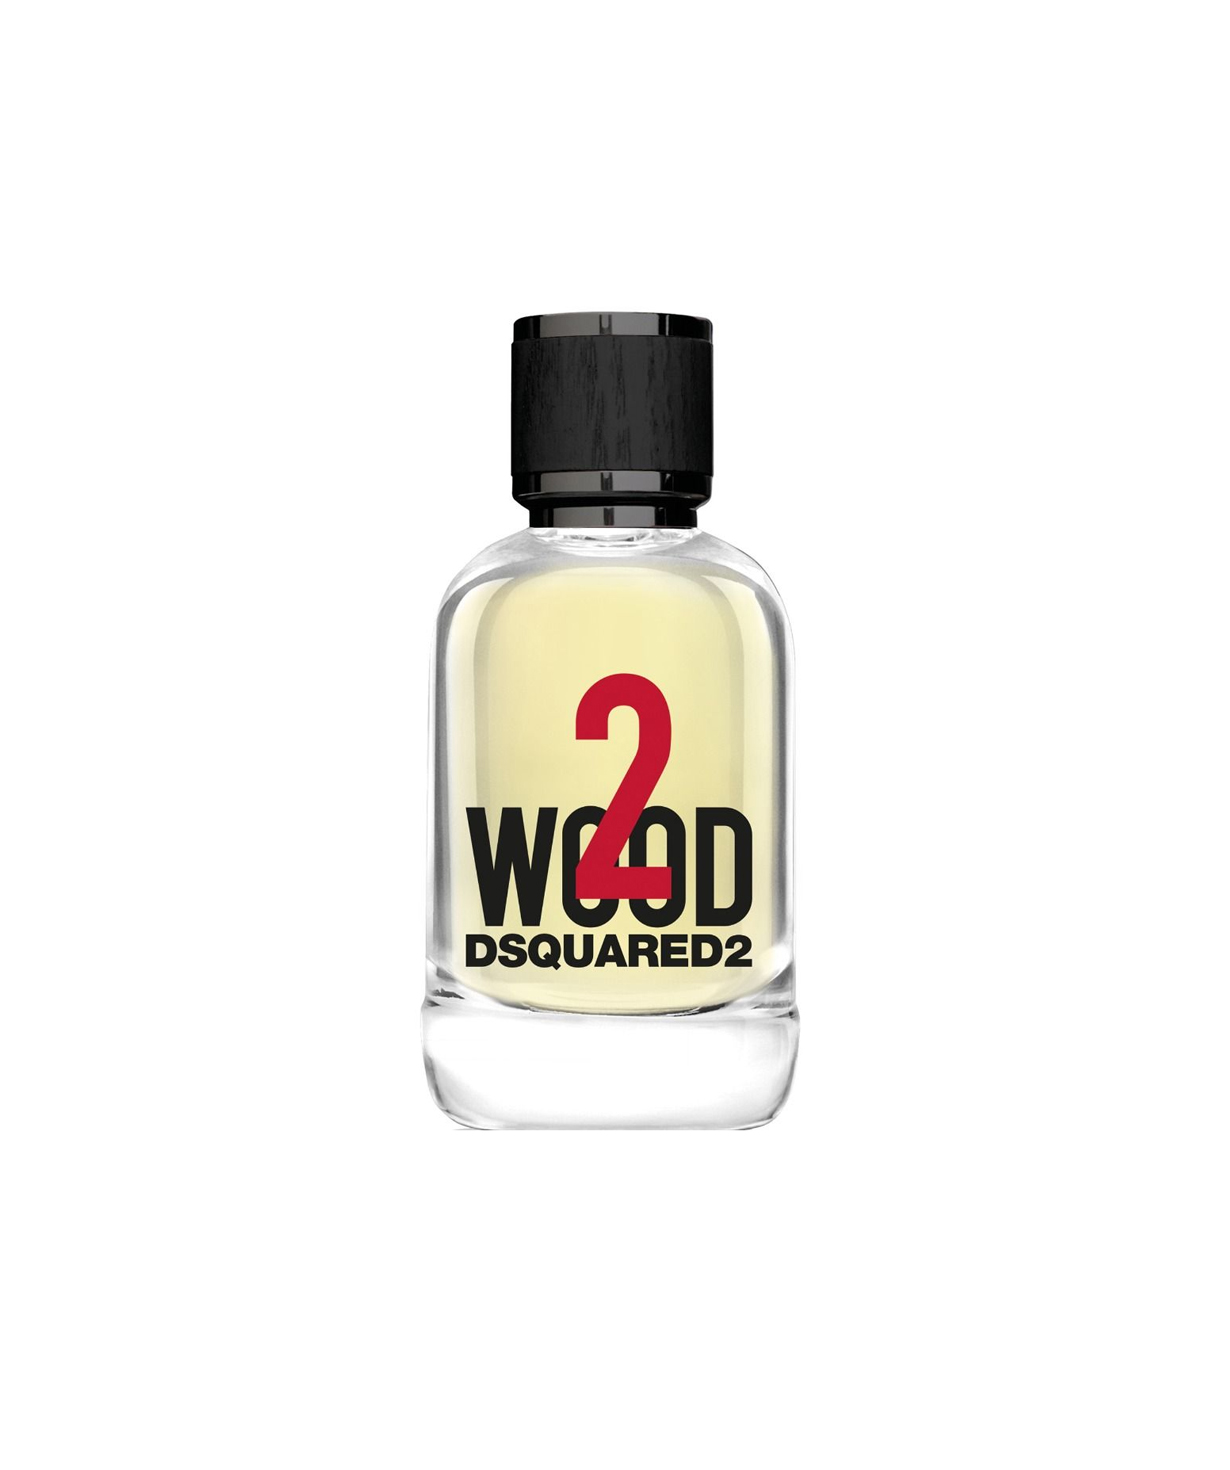 Perfume «Dsquared2» 2 Wood, unisex, 50 ml